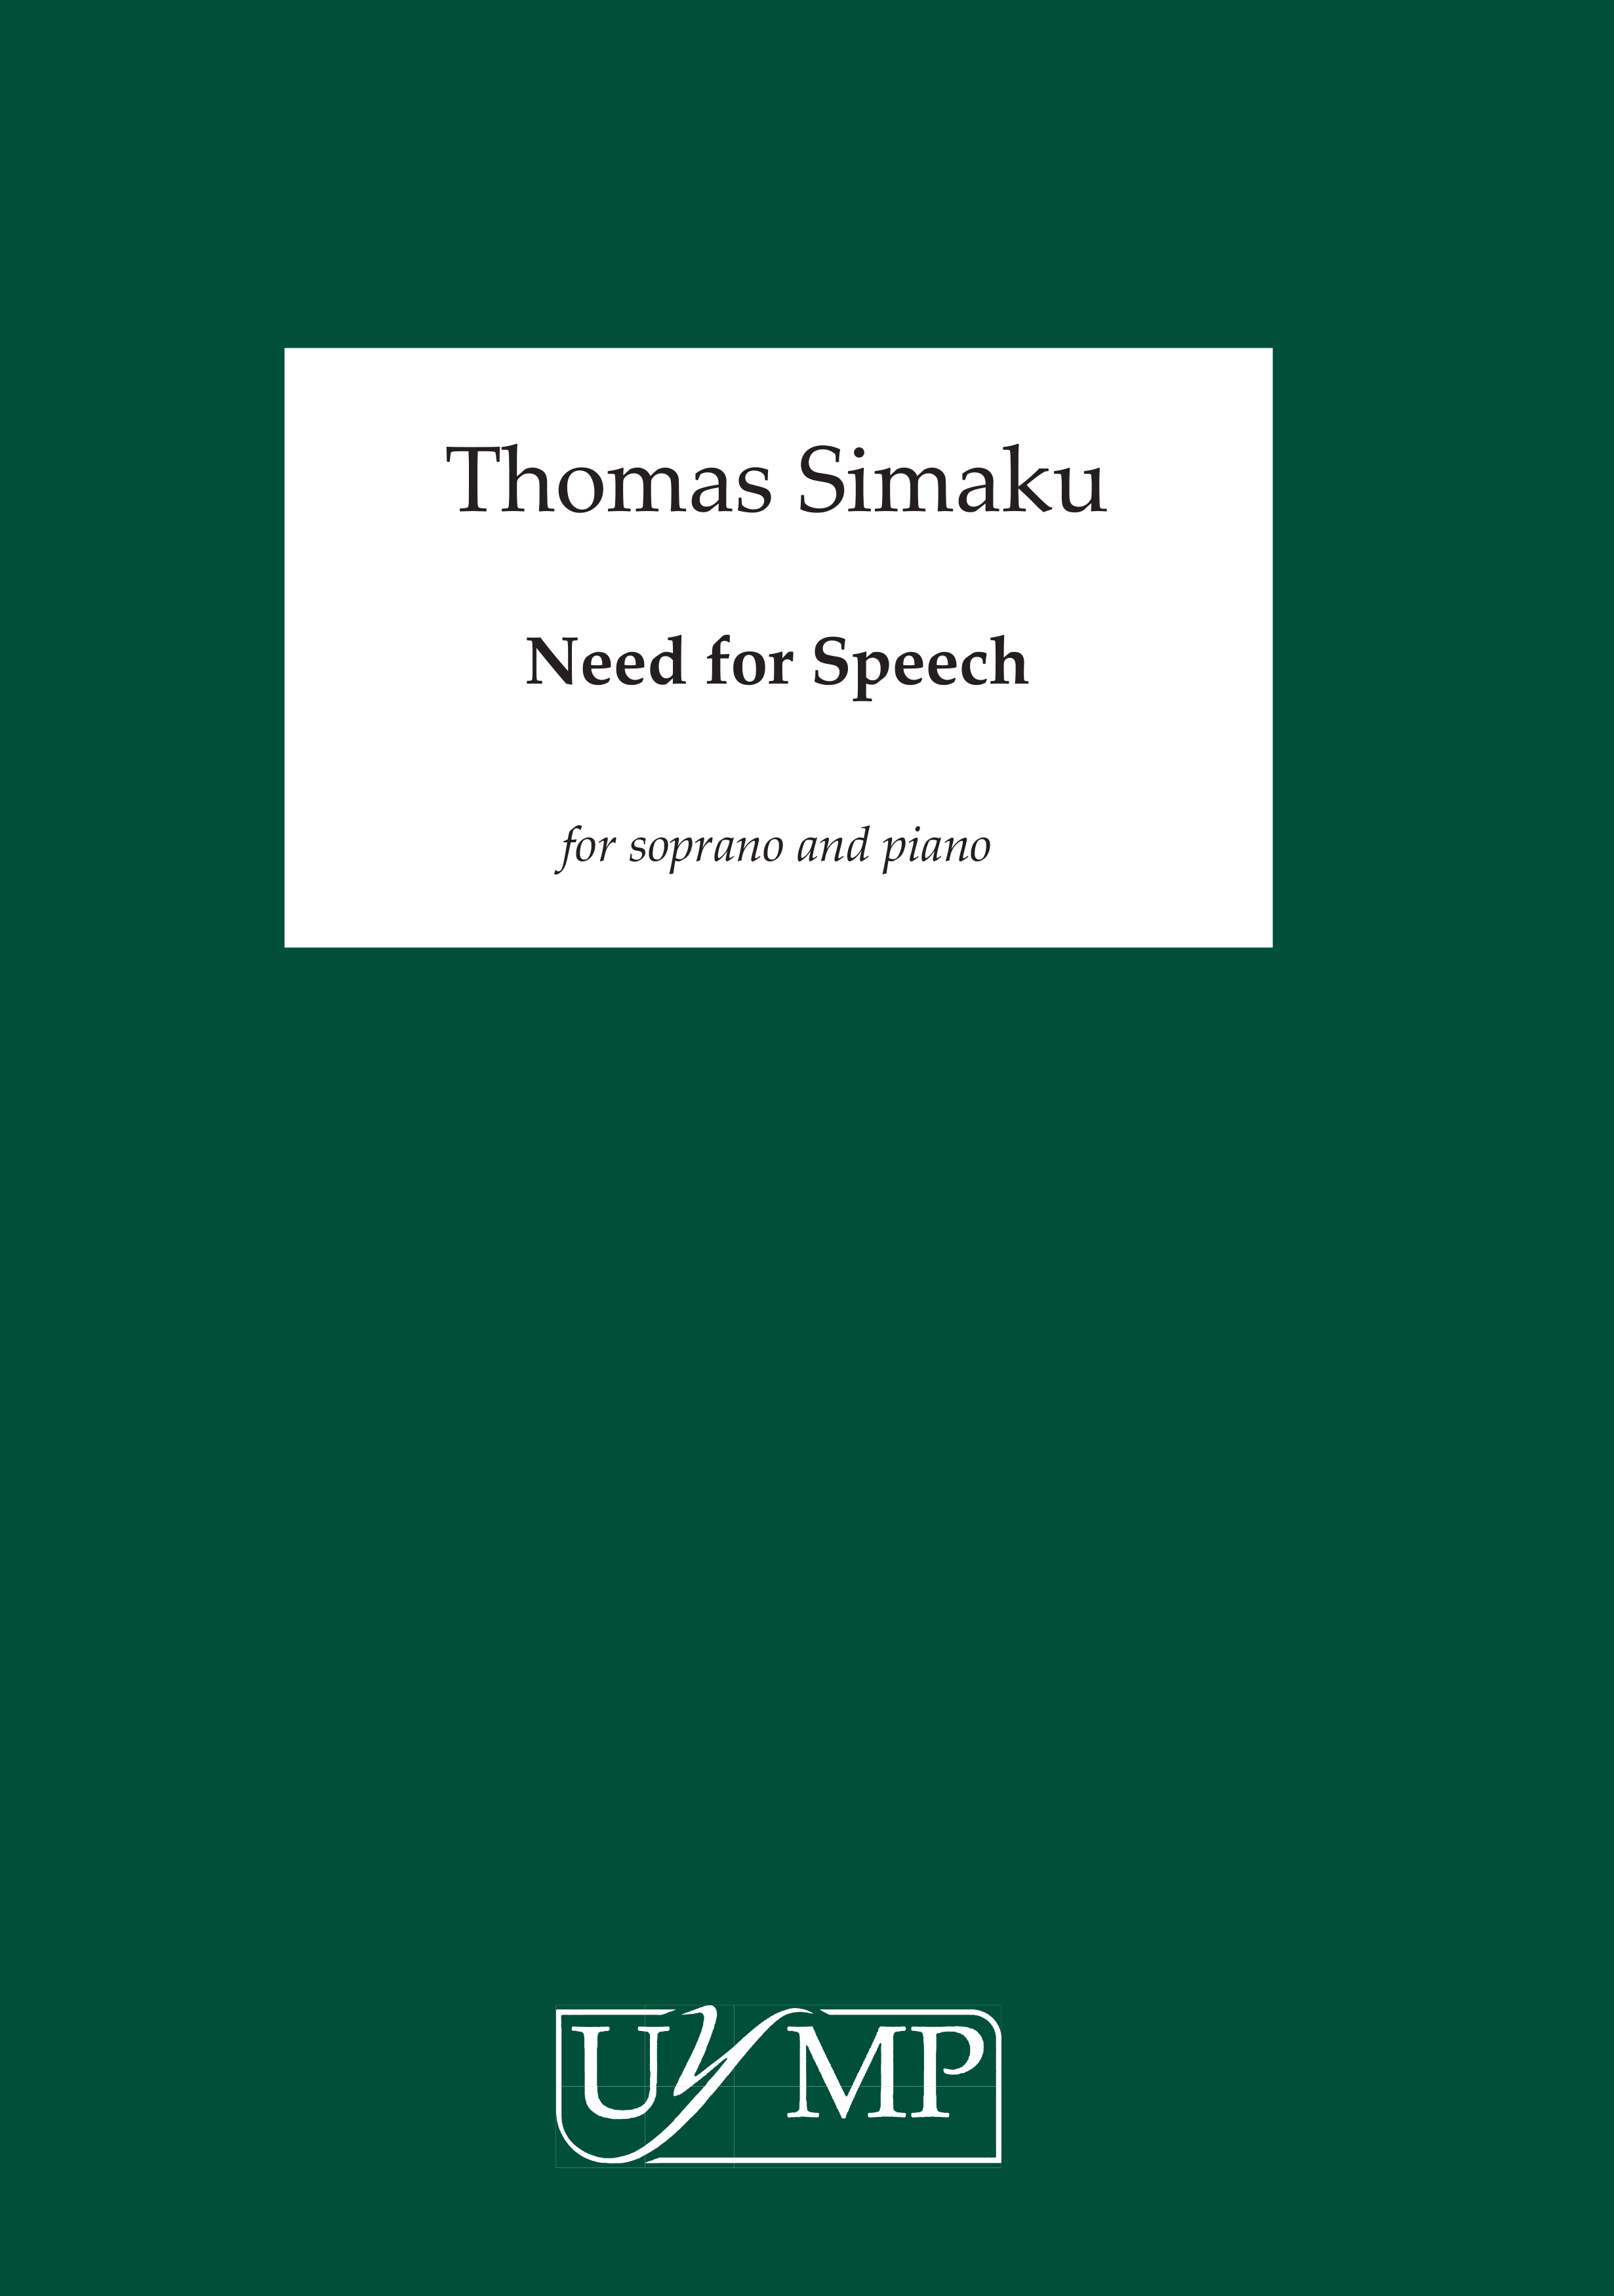 Thomas Simaku: Need for Speech